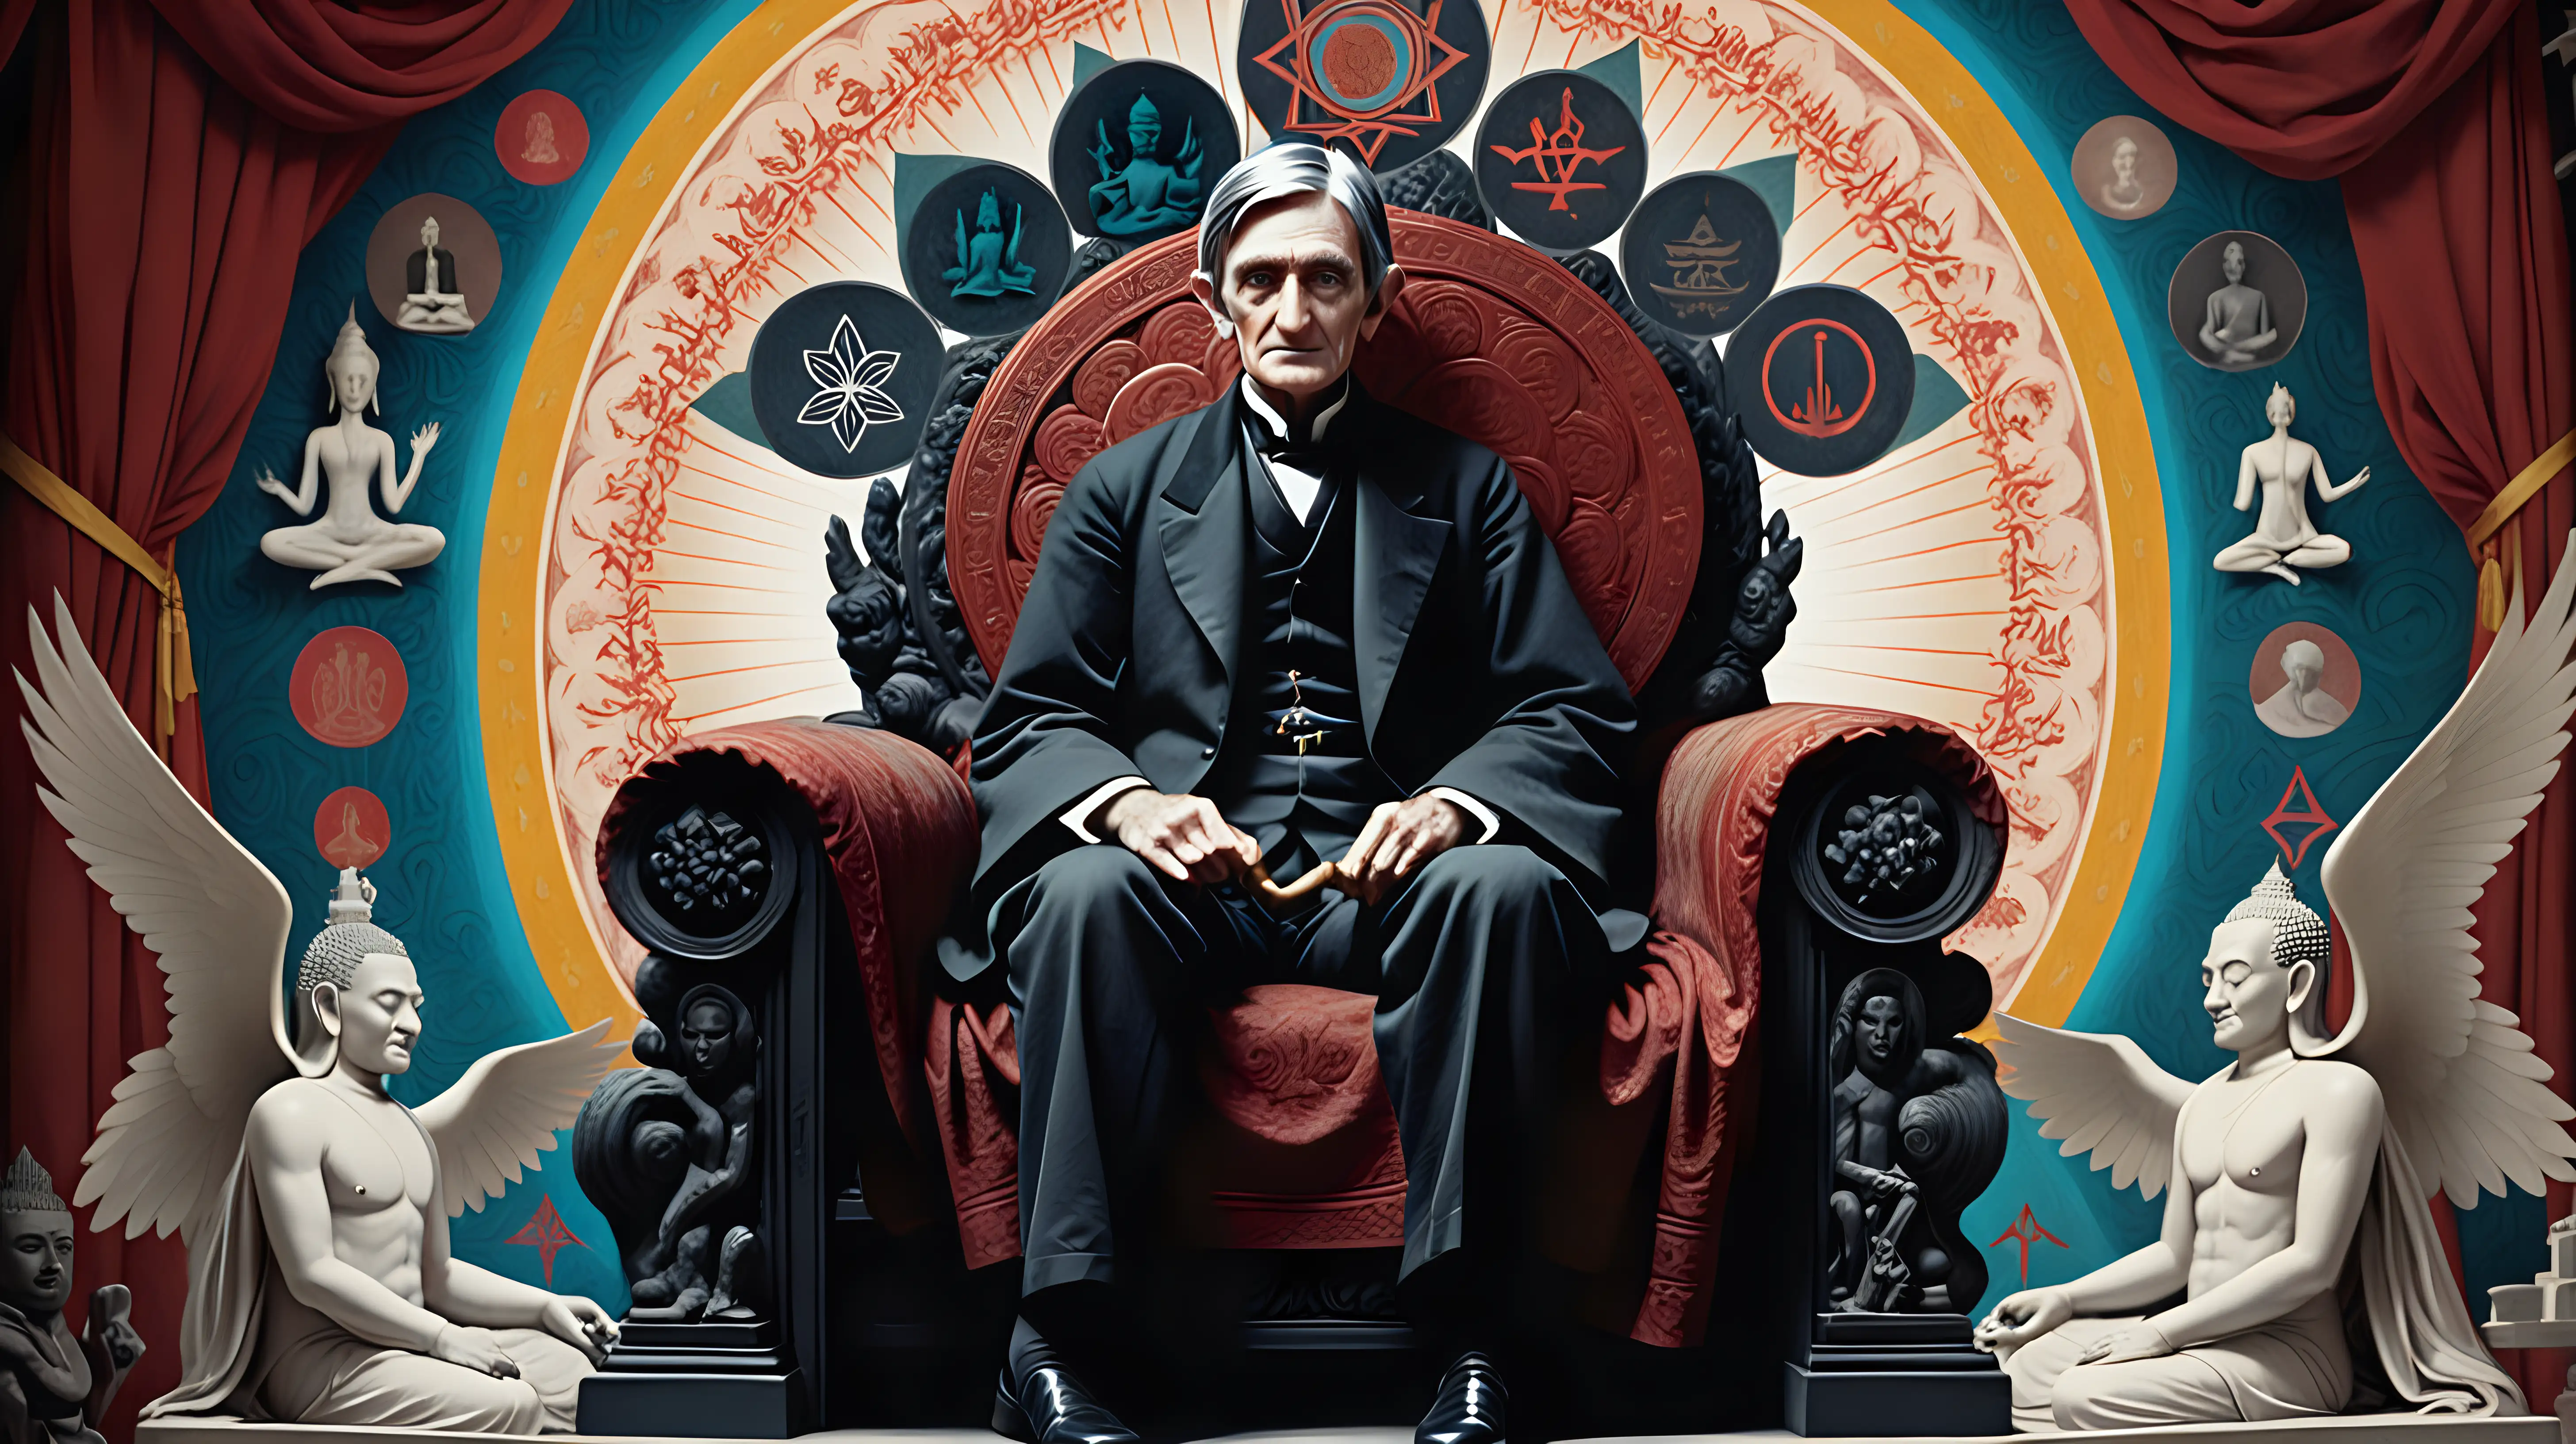 Ralph Waldo Emerson Seated Among Transcendental Symbols